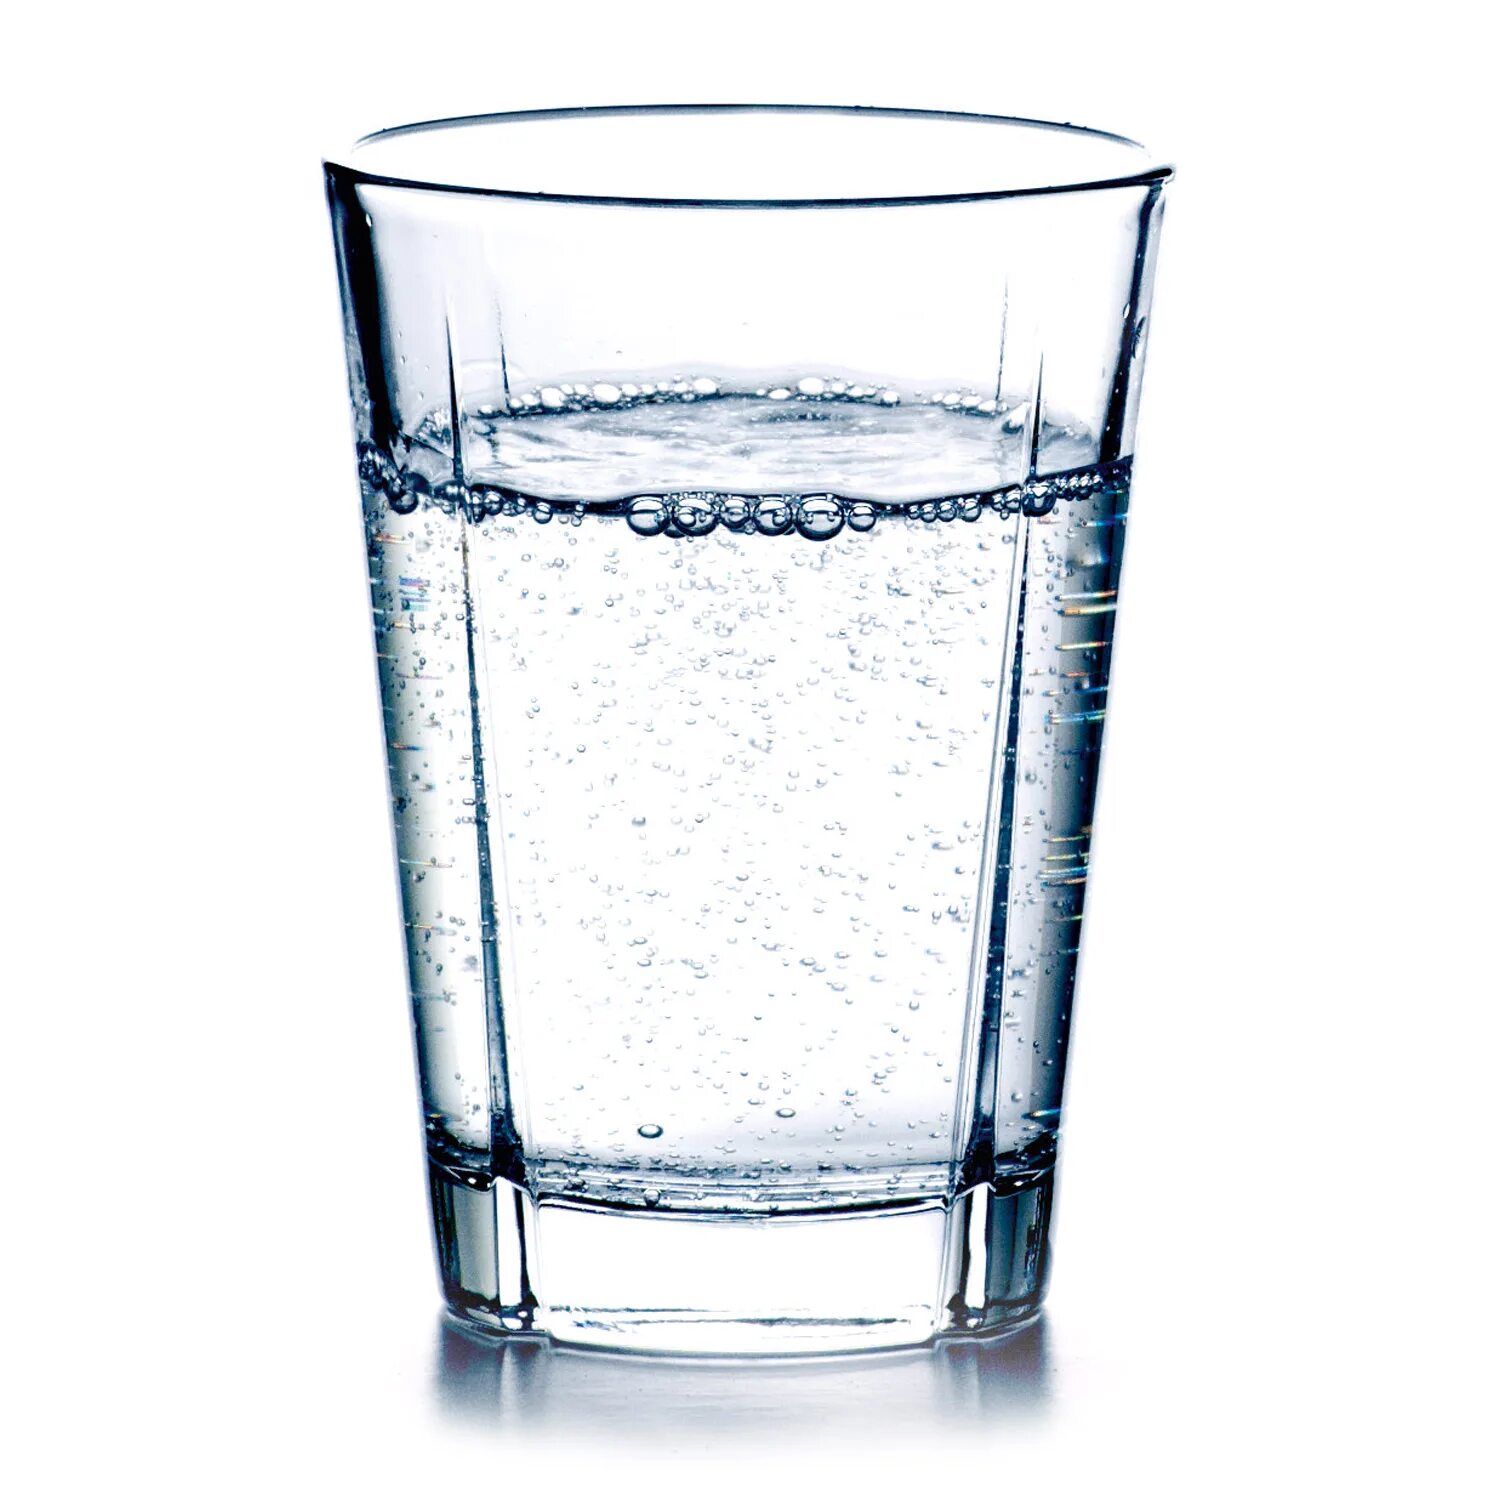 Четыре стакана воды. Стакан воды. Бокалы для воды. Прозрачная вода в стакане. Стакан воды без фона.